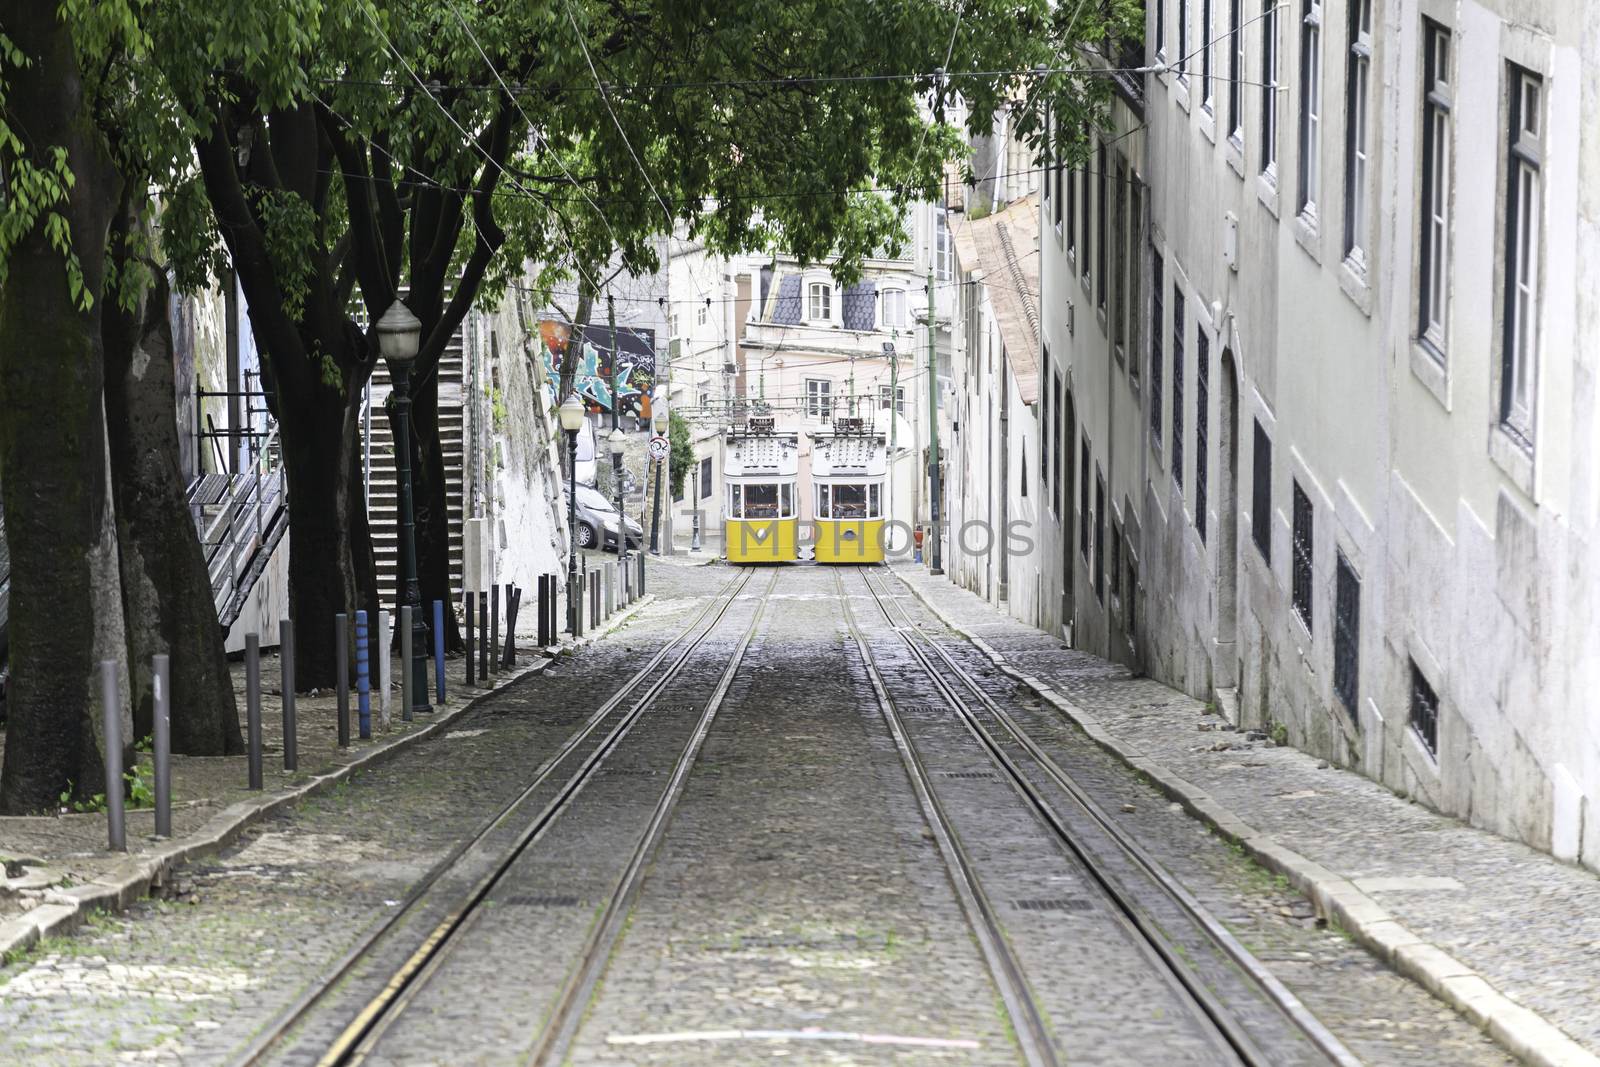 Old Lisbon tram by esebene